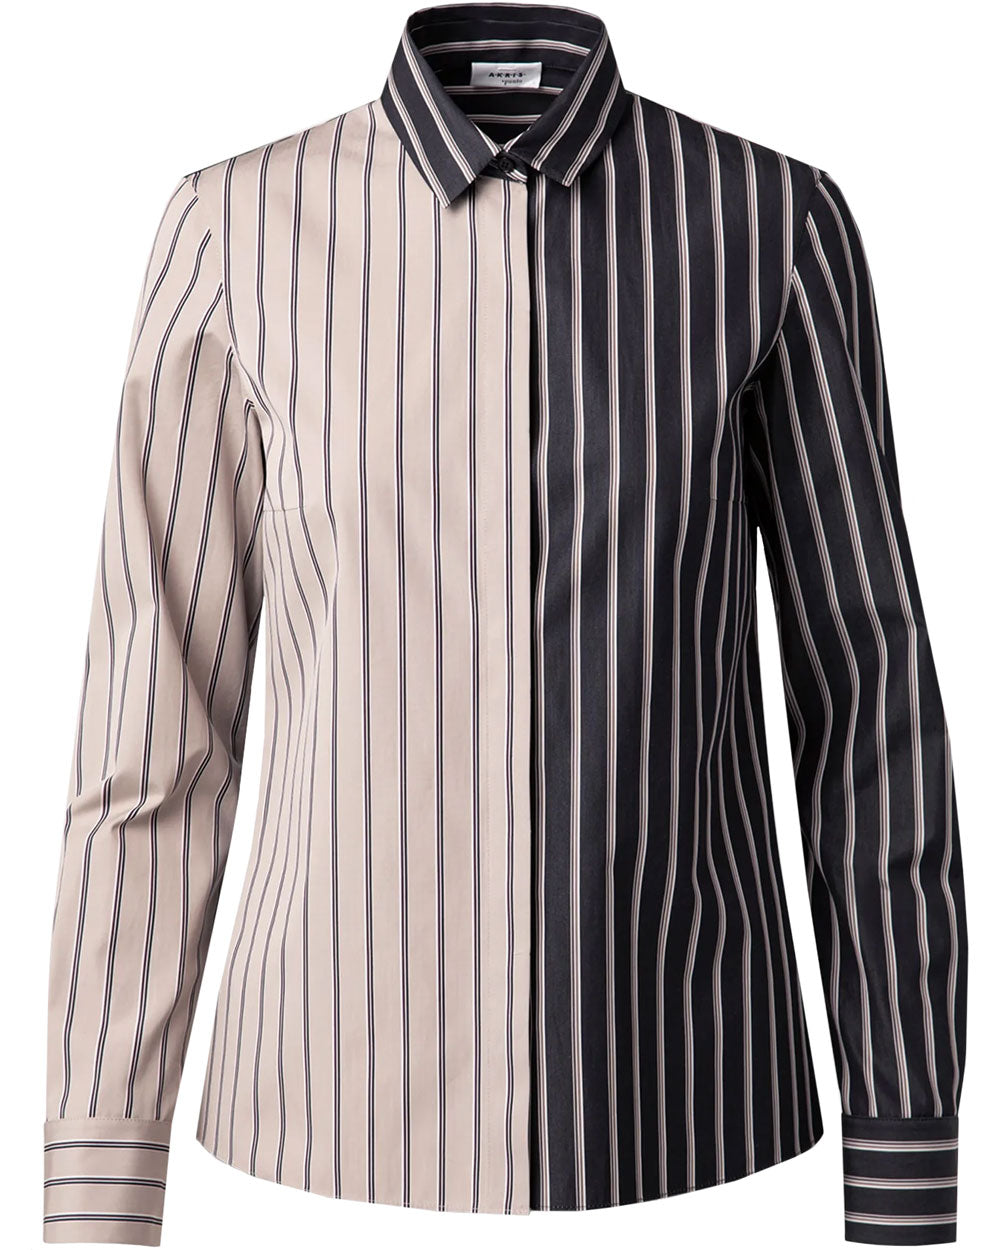 Light Malt and Black Stripe Cotton Poplin Shirt